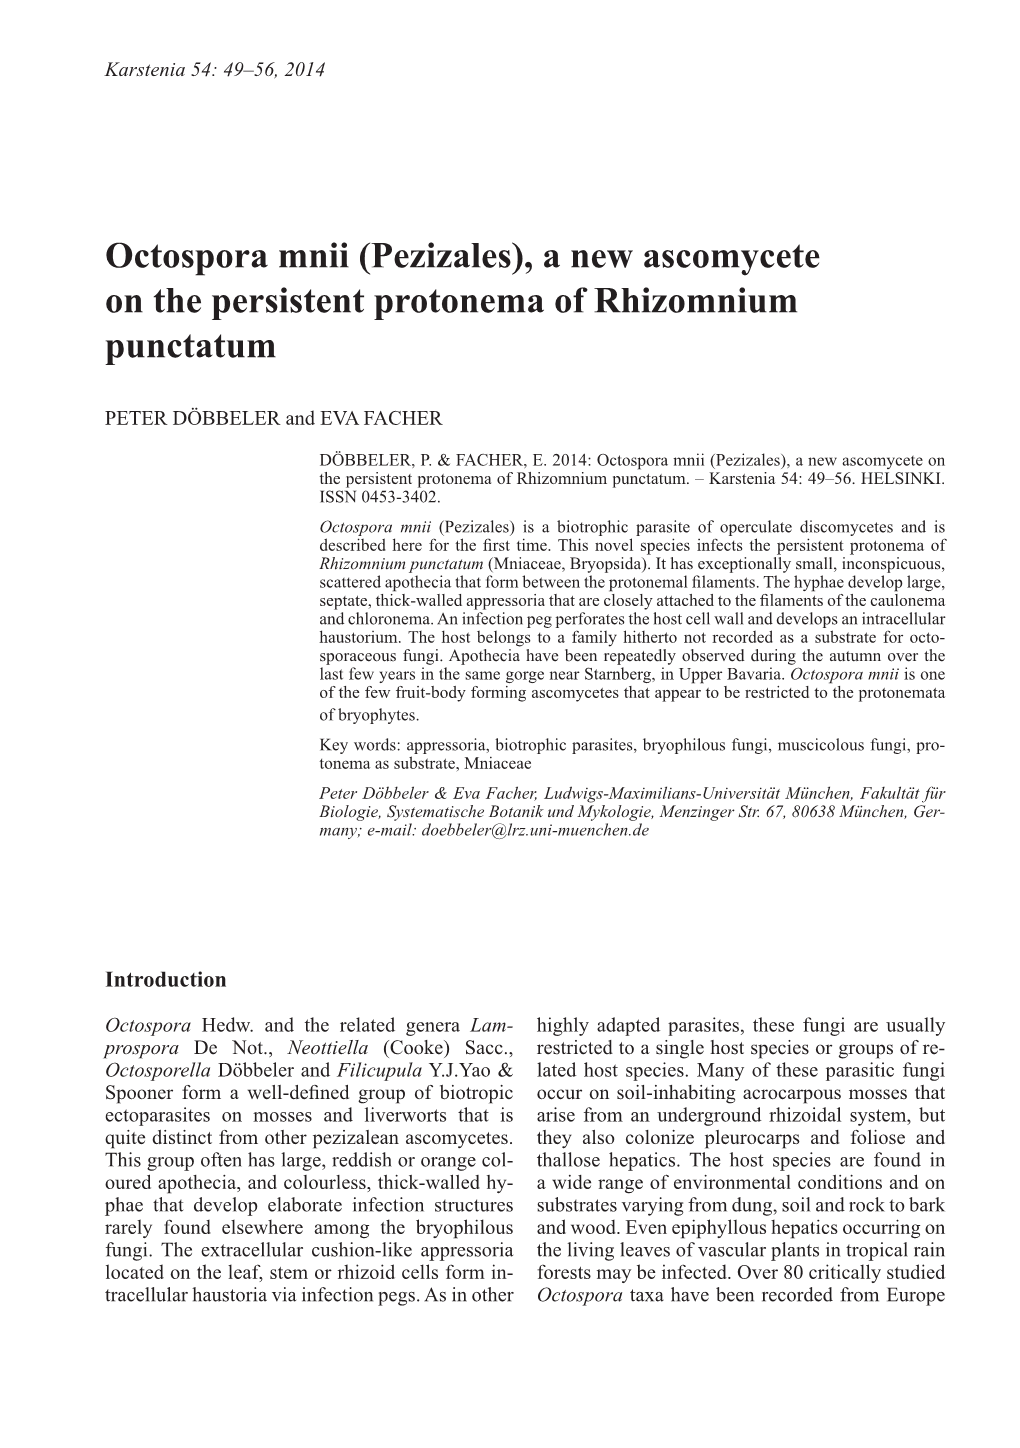 Octospora Mnii Pezizales, a New Ascomycete on the Persistent